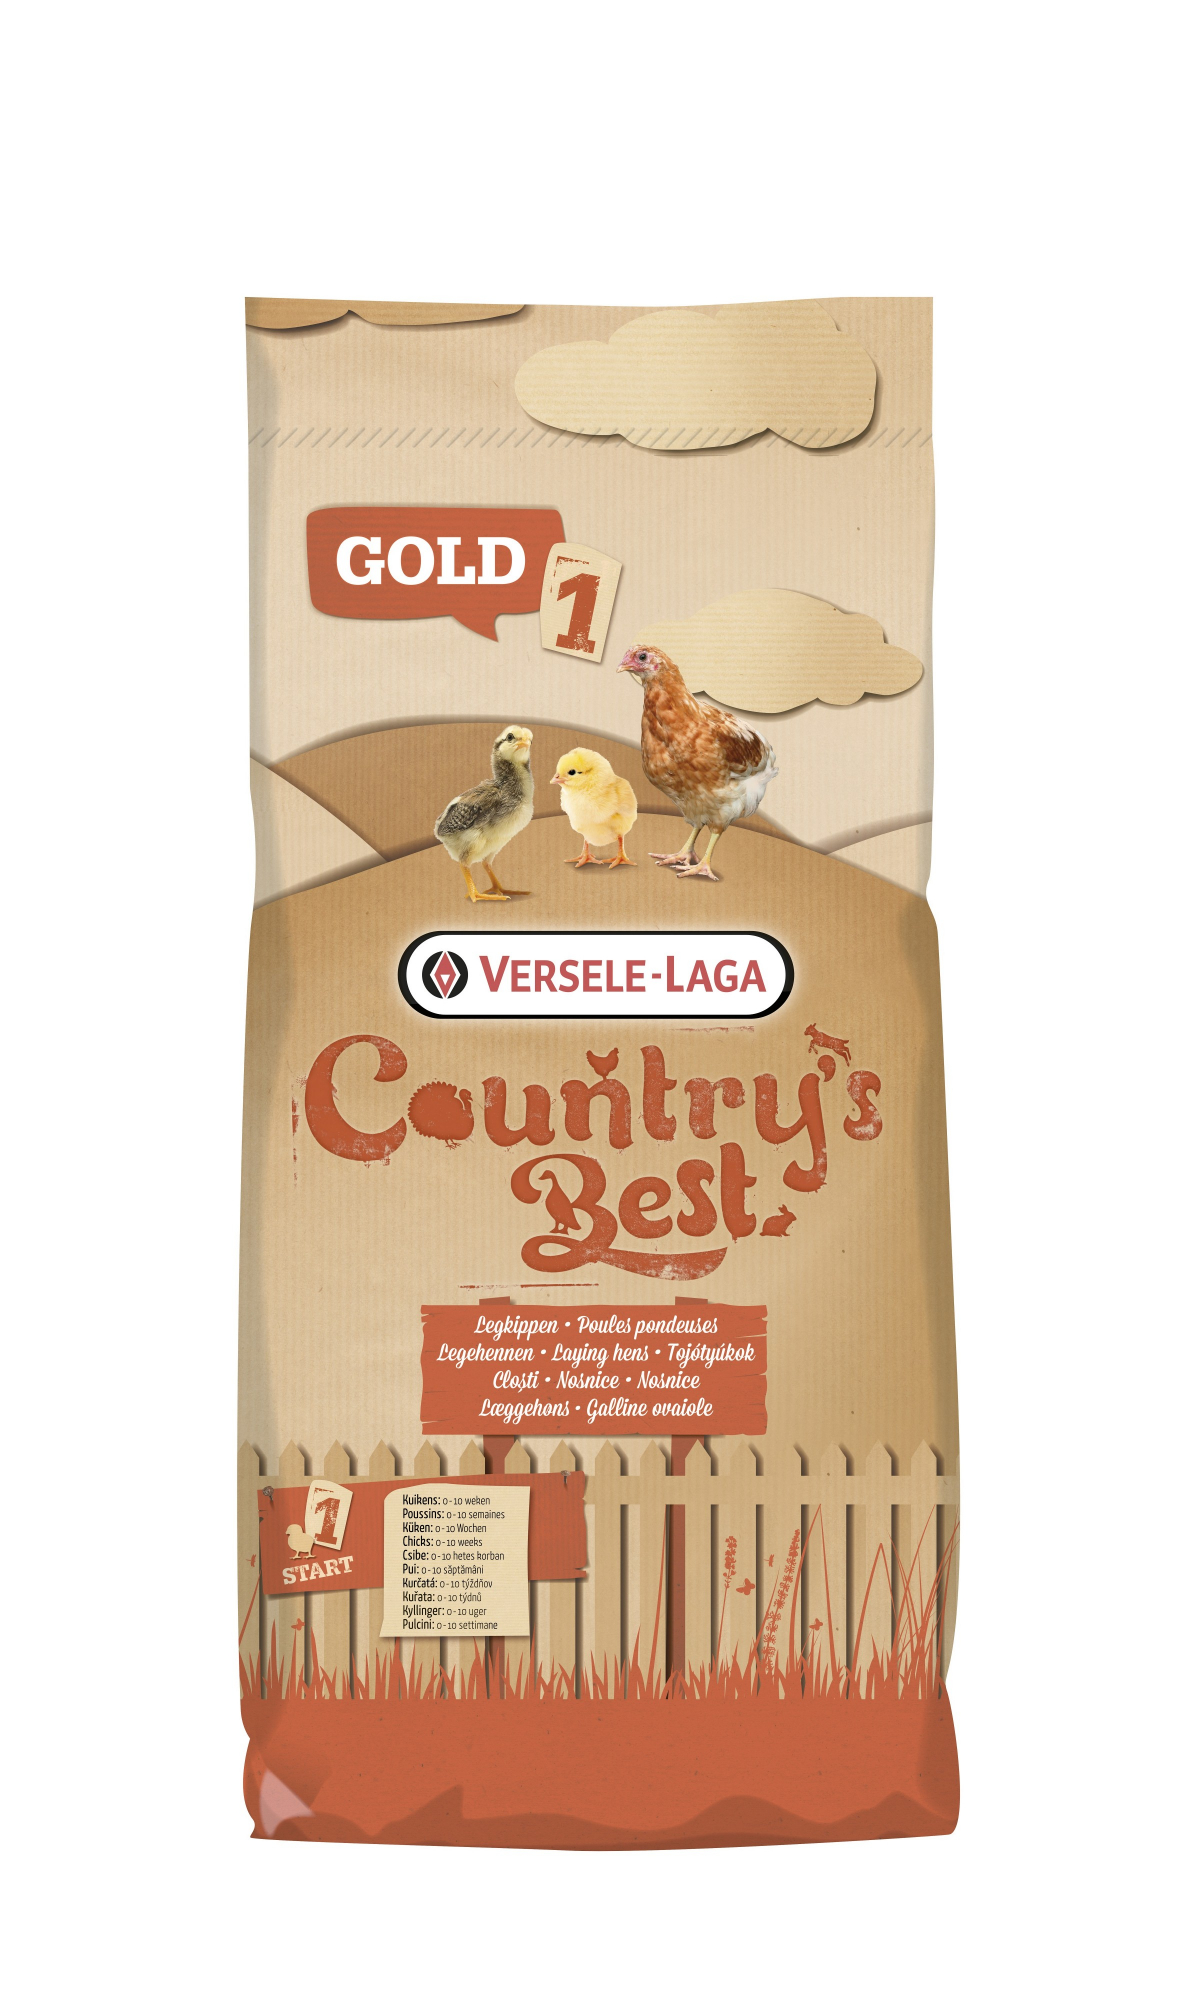 Gold 1 Crumble Country's Best Alimento de inicio gallinas